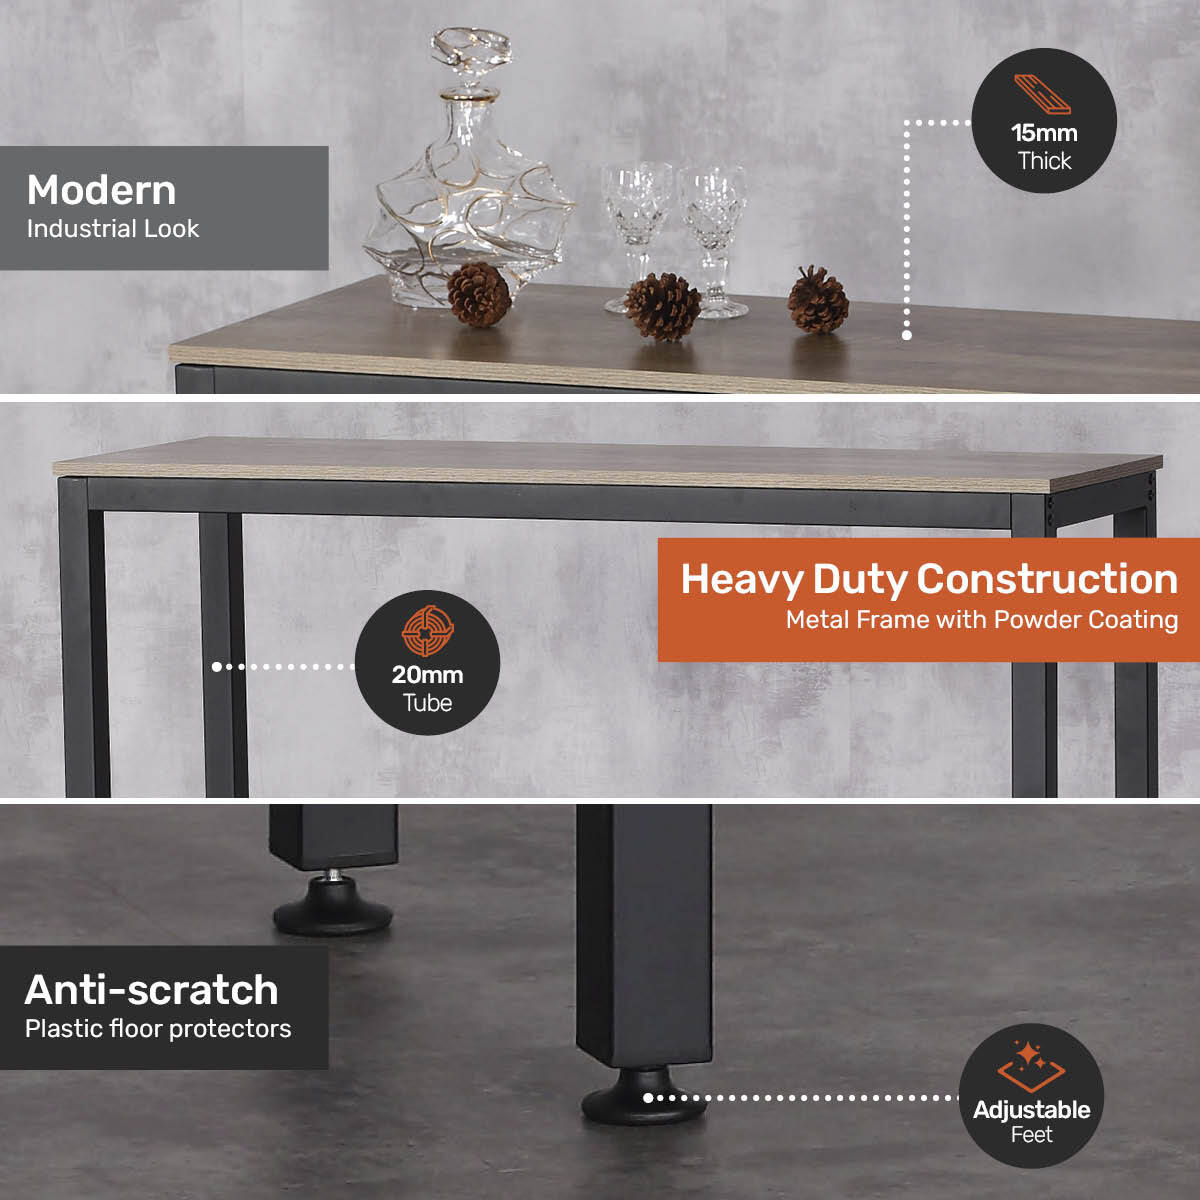 Home Master High Bar Table Nordic Industrial Design Stylish Modern 120cm Deals499